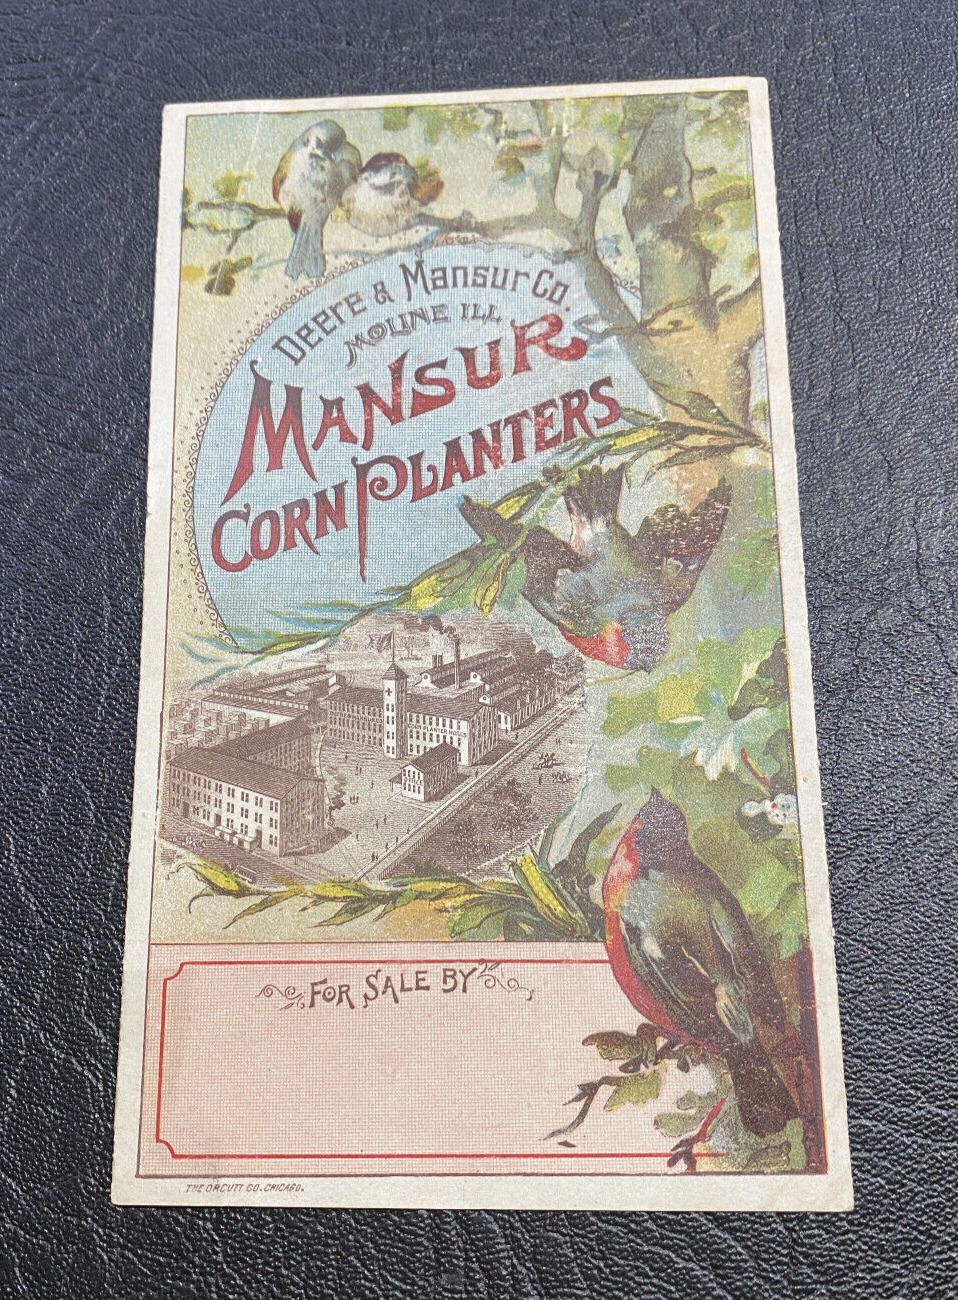 c. 1887 DEERE & MANSUR BANNER CORN PLANTERS, Moline,IL, 3-Panel Trade Card